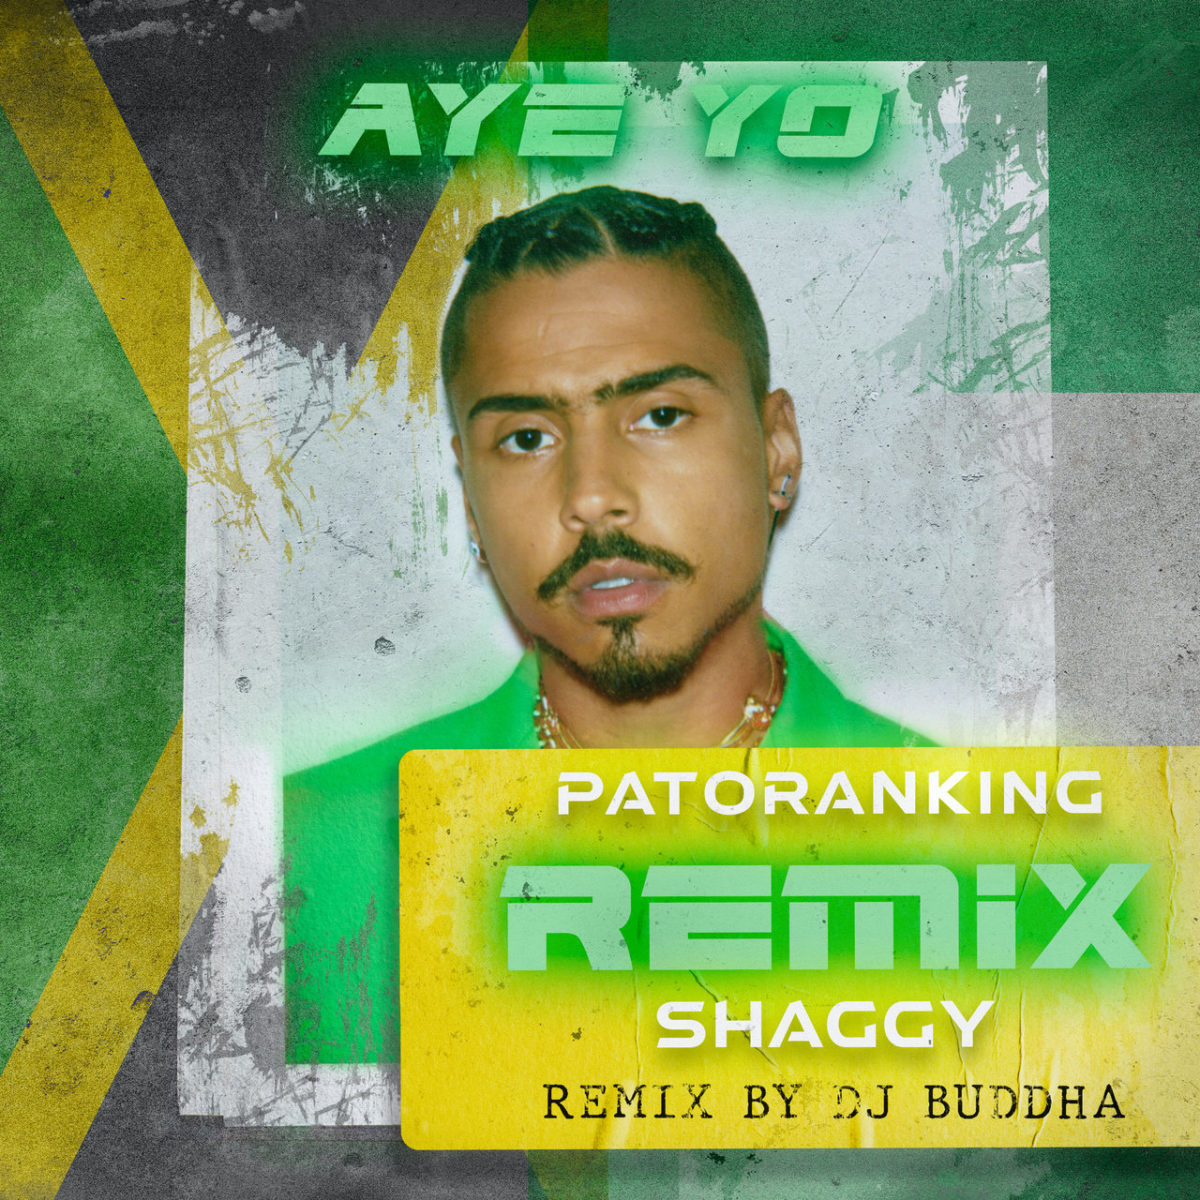 Quincy - Aye Yo (Remix By DJ Buddha) (ft. Shaggy and Patoranking) (Cover)